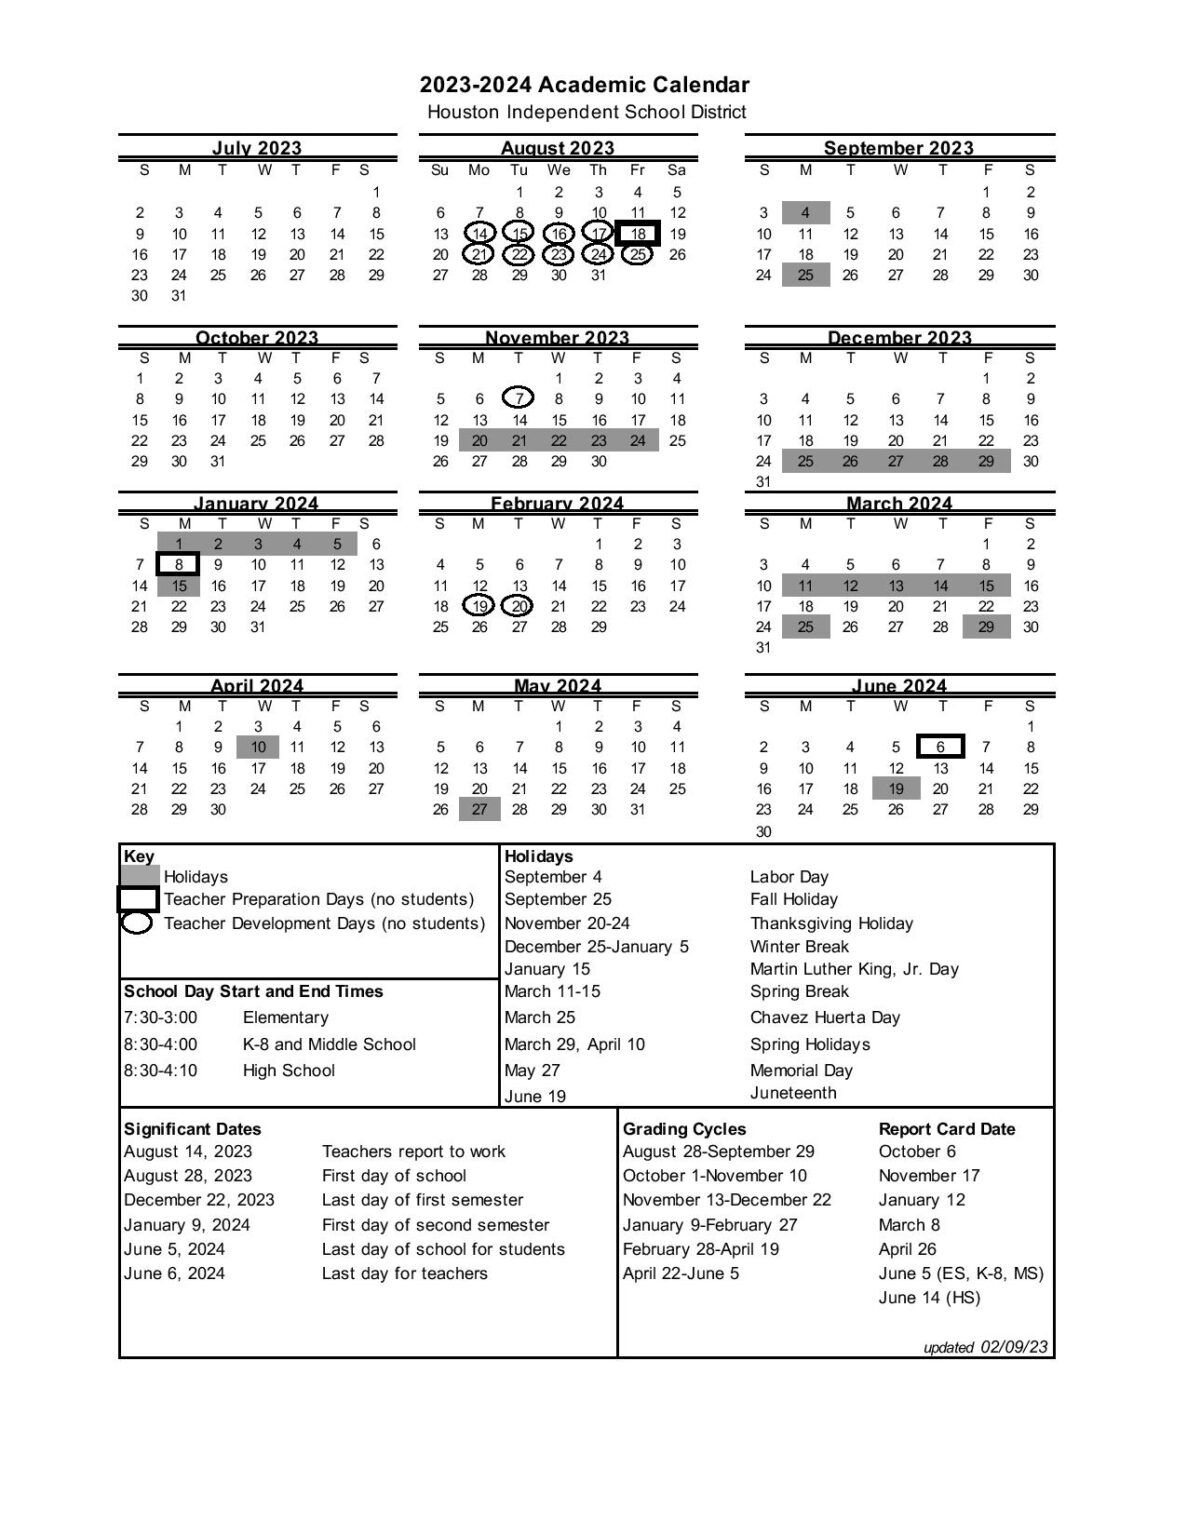 Houston Independent School District Calendar 20232024 PDF